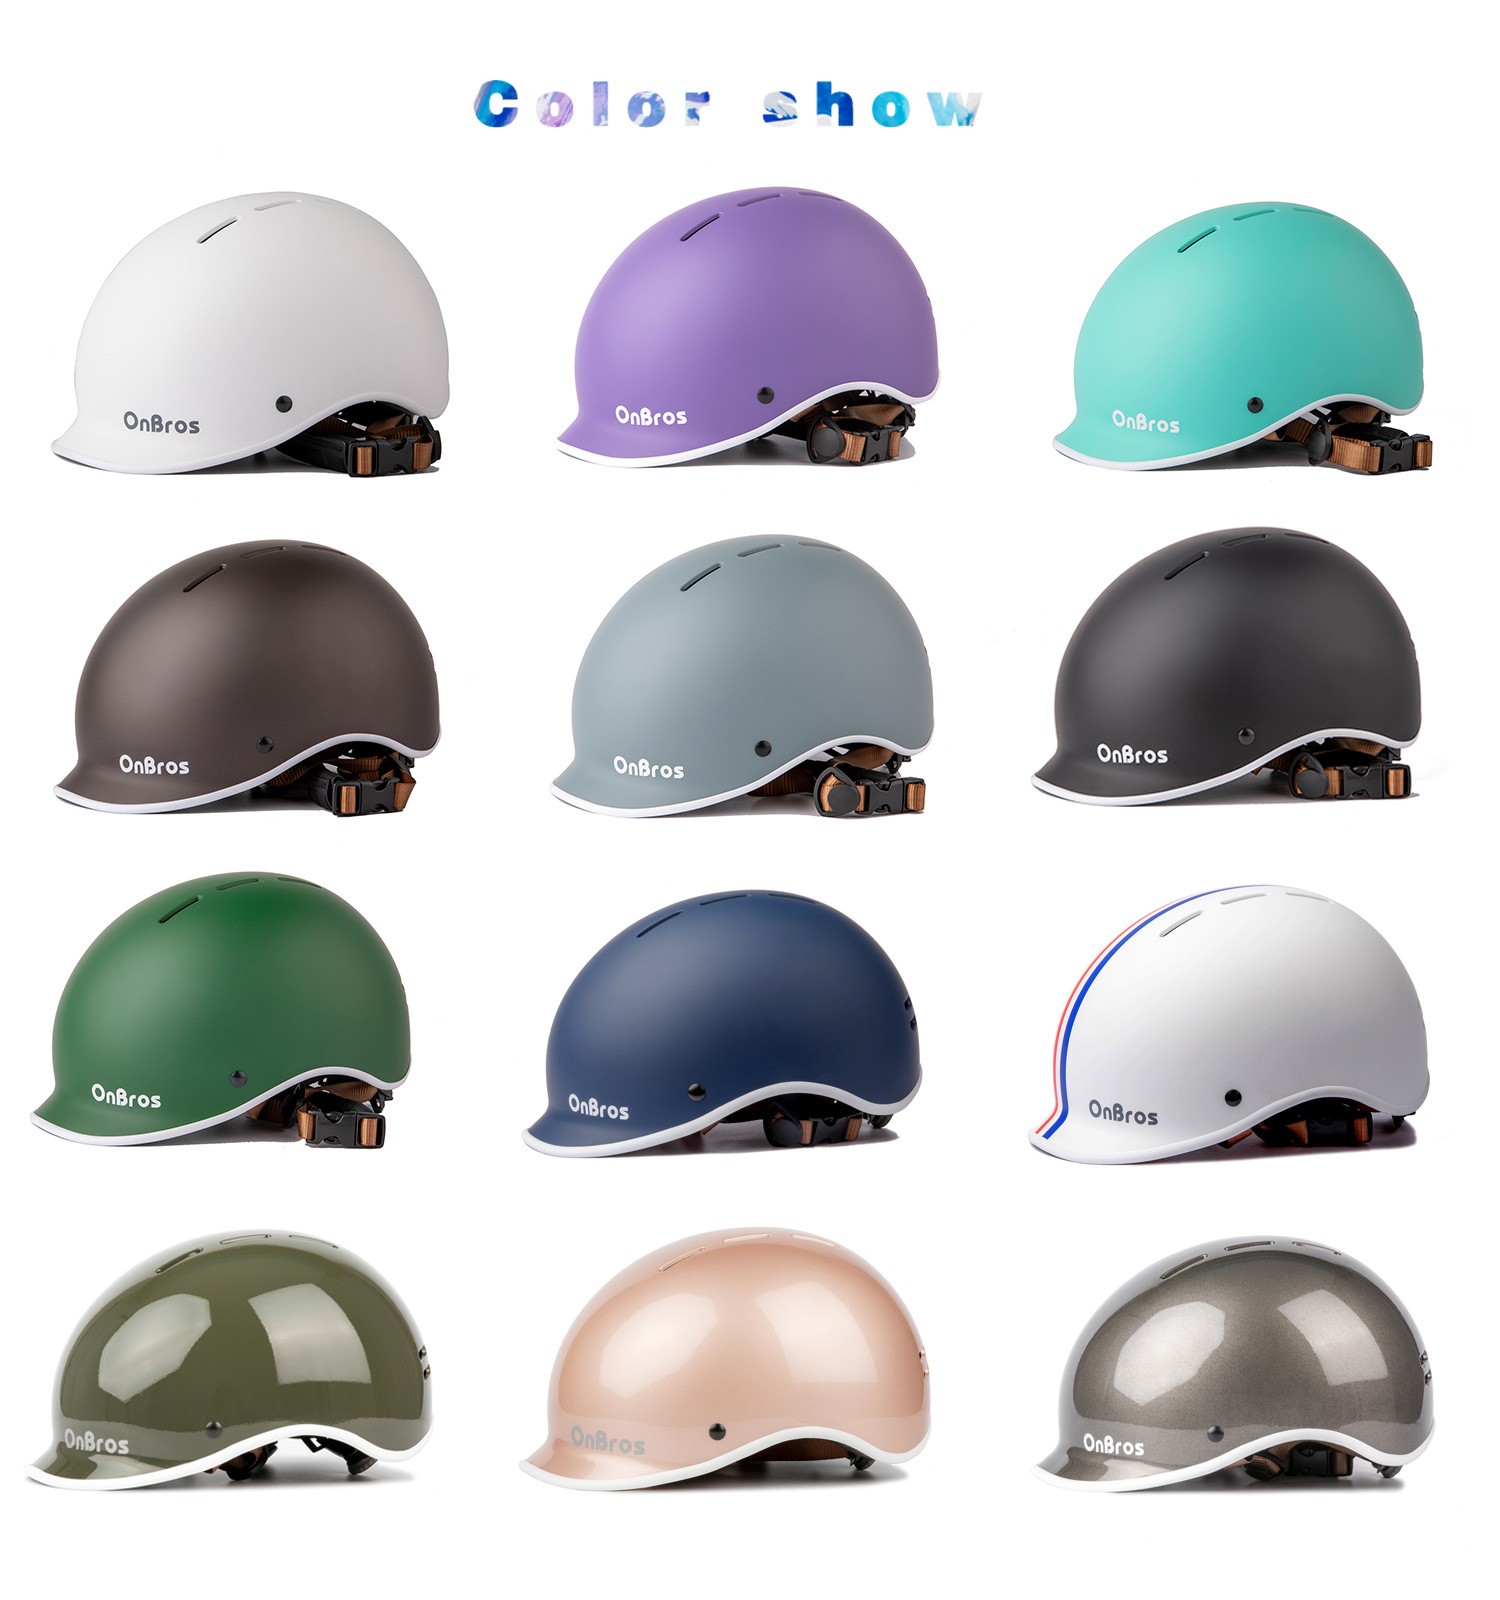 OnBros外贸新款跨境城市复古头盔休闲自行车安全帽公路骑行头盔